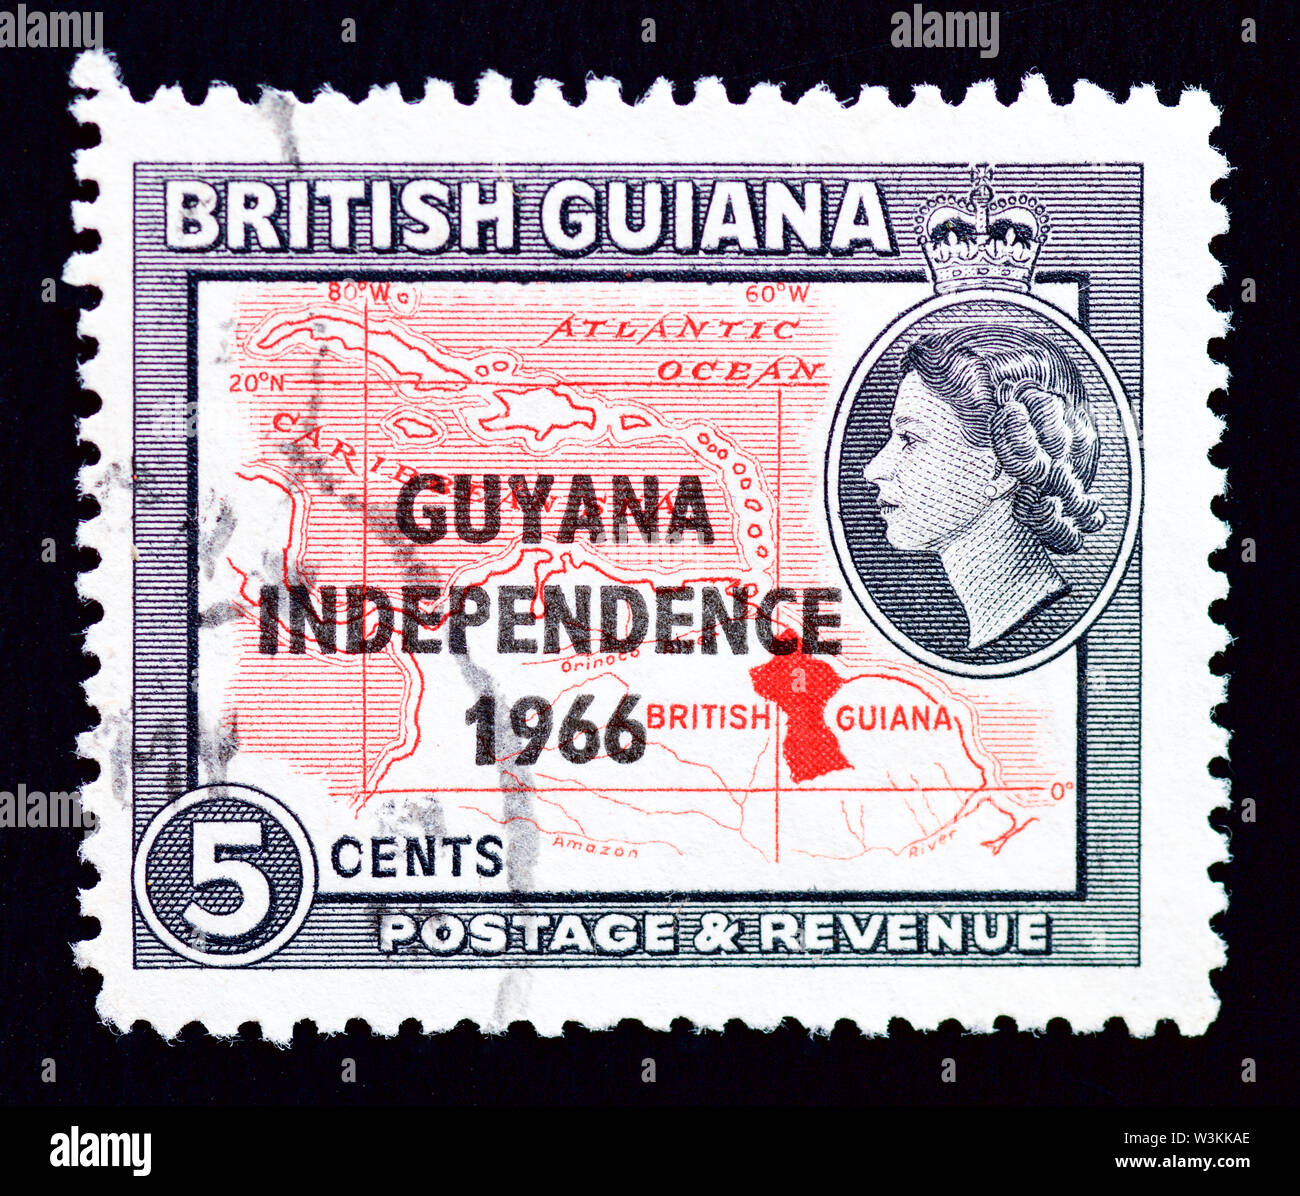 British Guiana Postage Stamp with London Overprint - 1966 Stock Photo